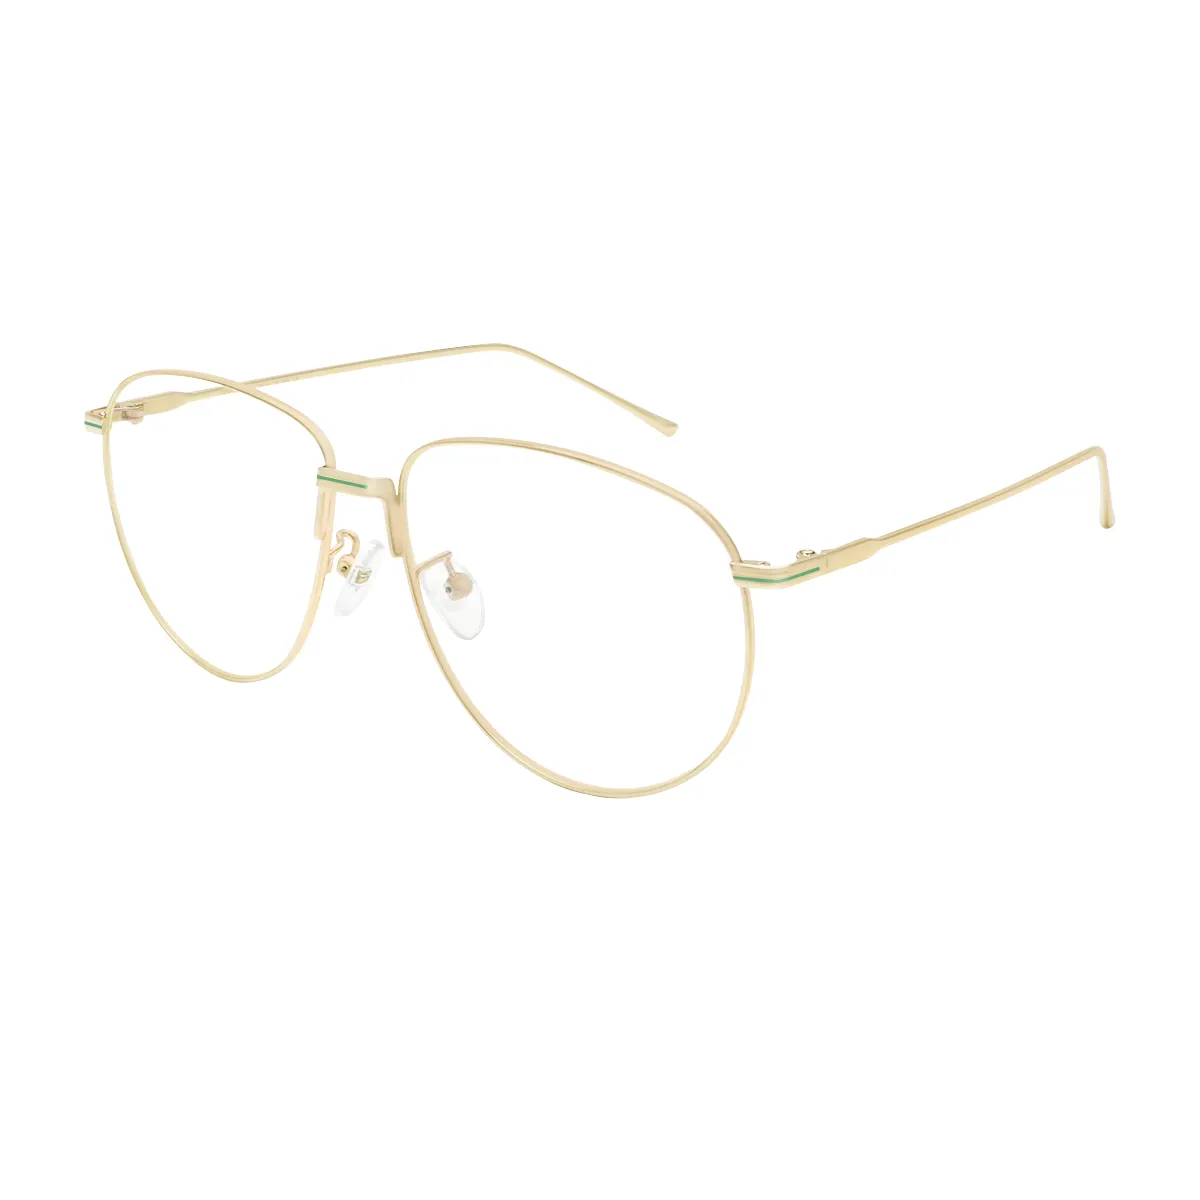 Fashion Aviator Gold Glasses for Men